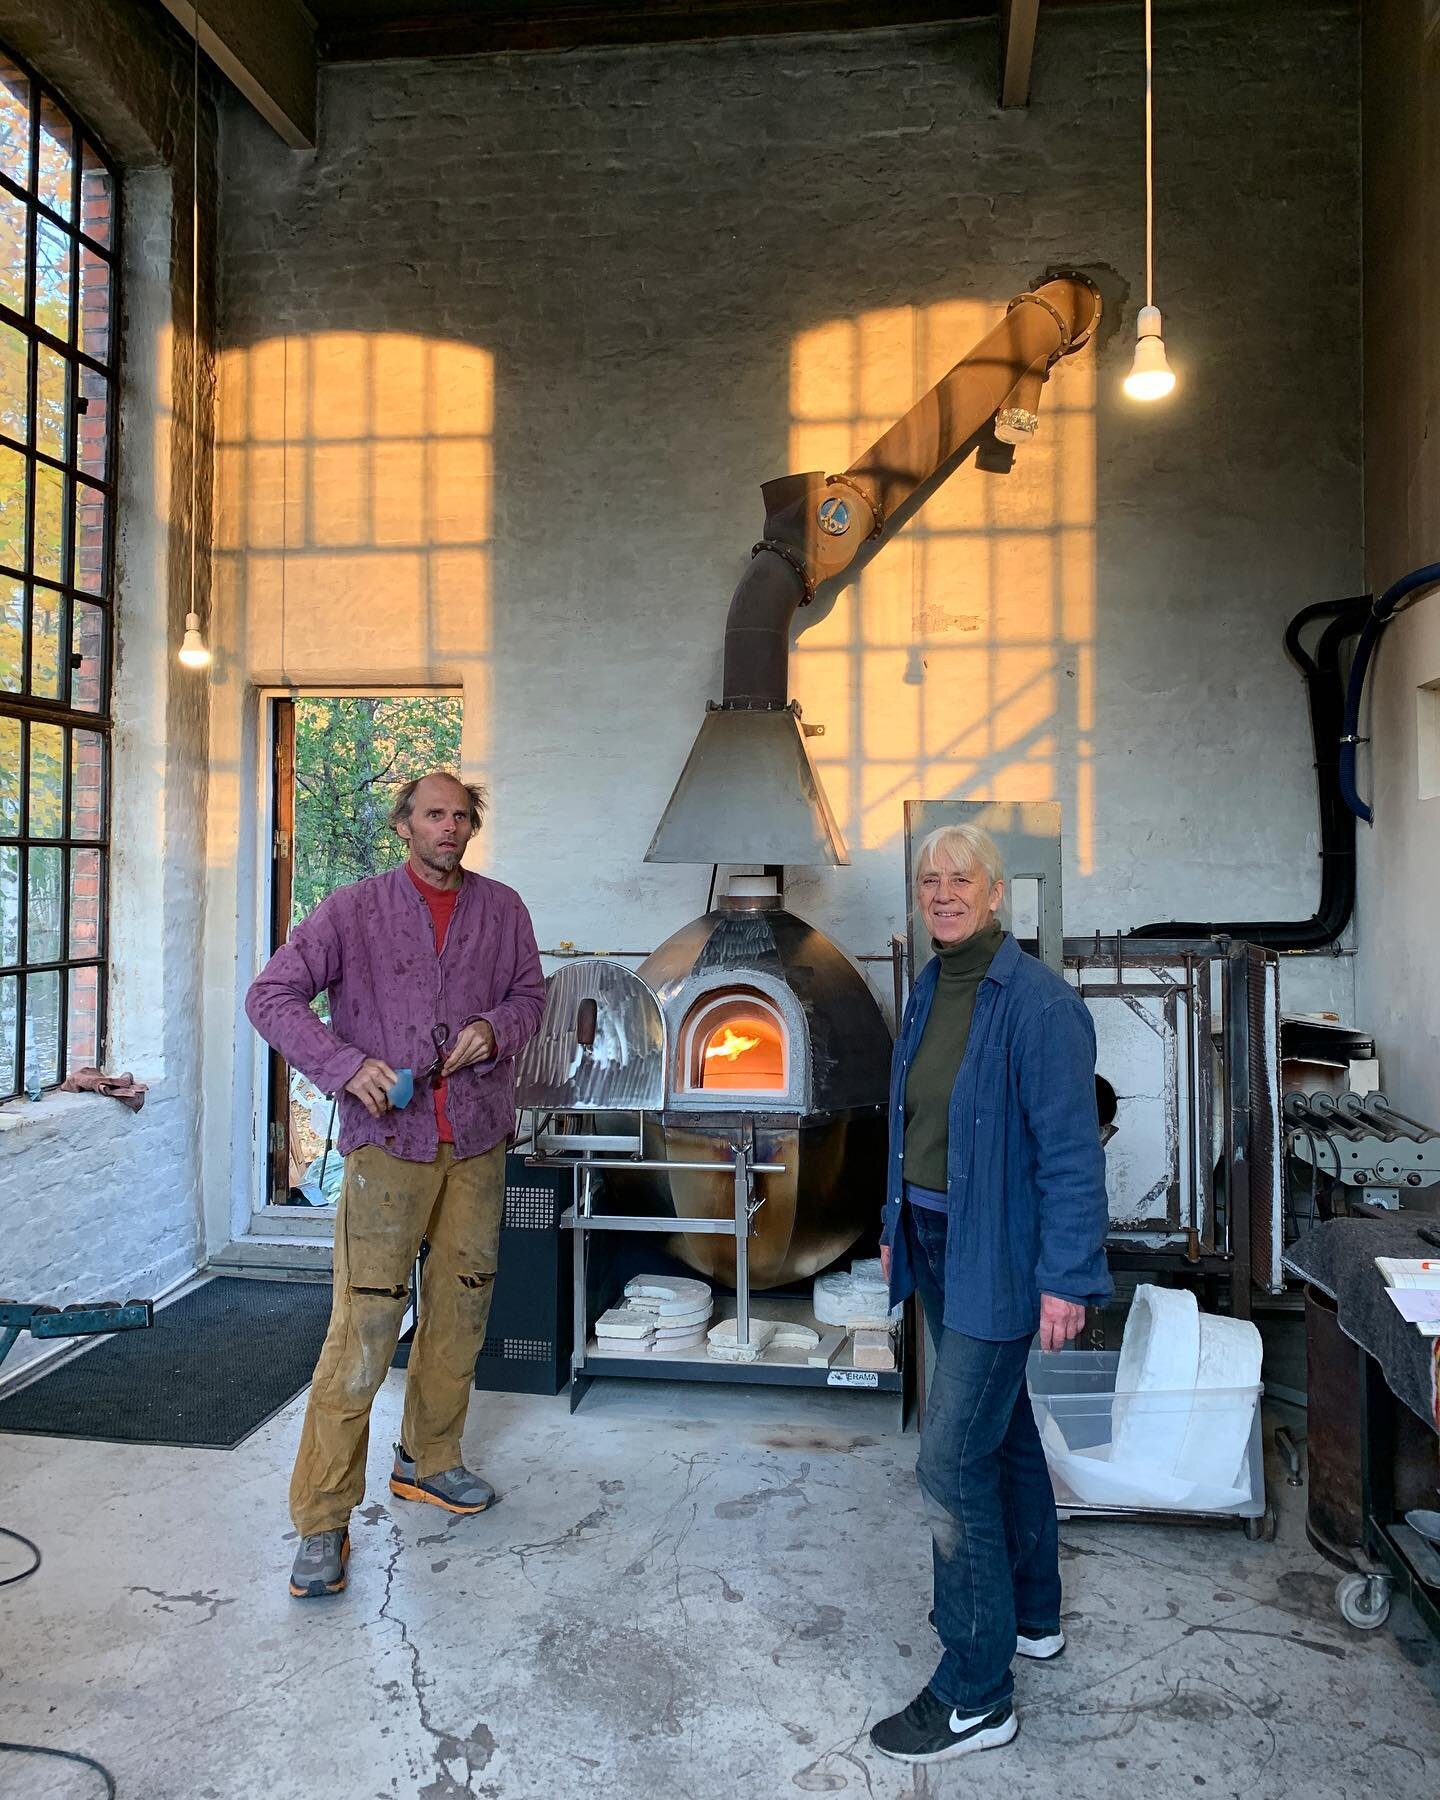 Glassblåserne Pål Roland Janssen og Karen Klim fyrer opp ovnen og holder den varm helt opp mot jul #palrolandjanssen #karenklim  #glassblåsing  #frysjakunstnersenter #glassblowing #kunstneratelier #kulturetatenoslokommune #kunstarbeid